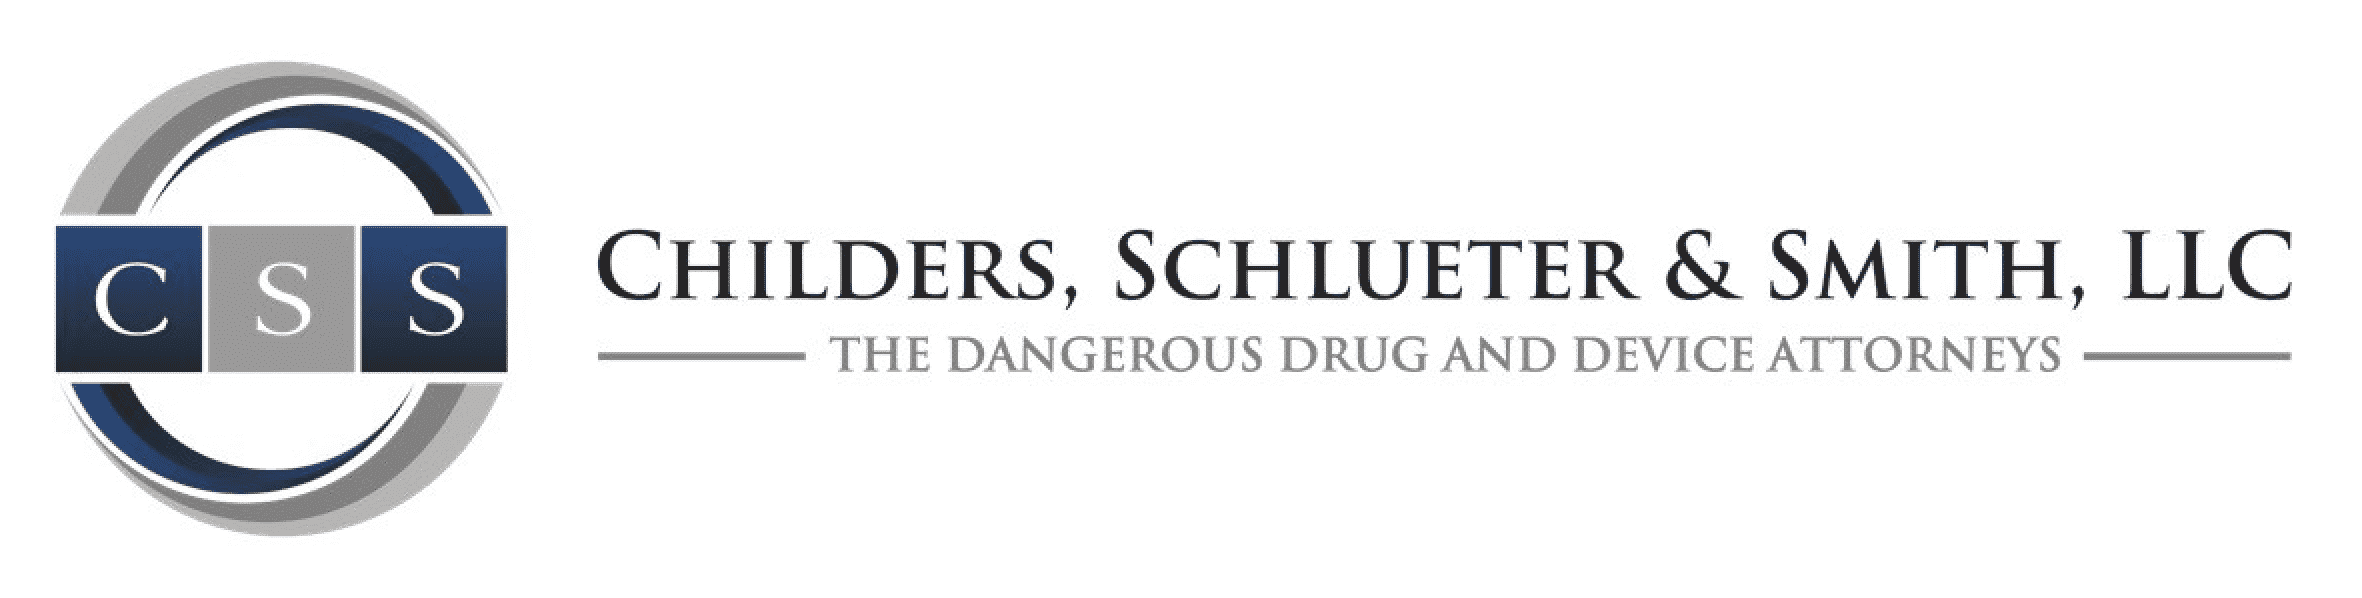 childers schlueter smith law firm logo